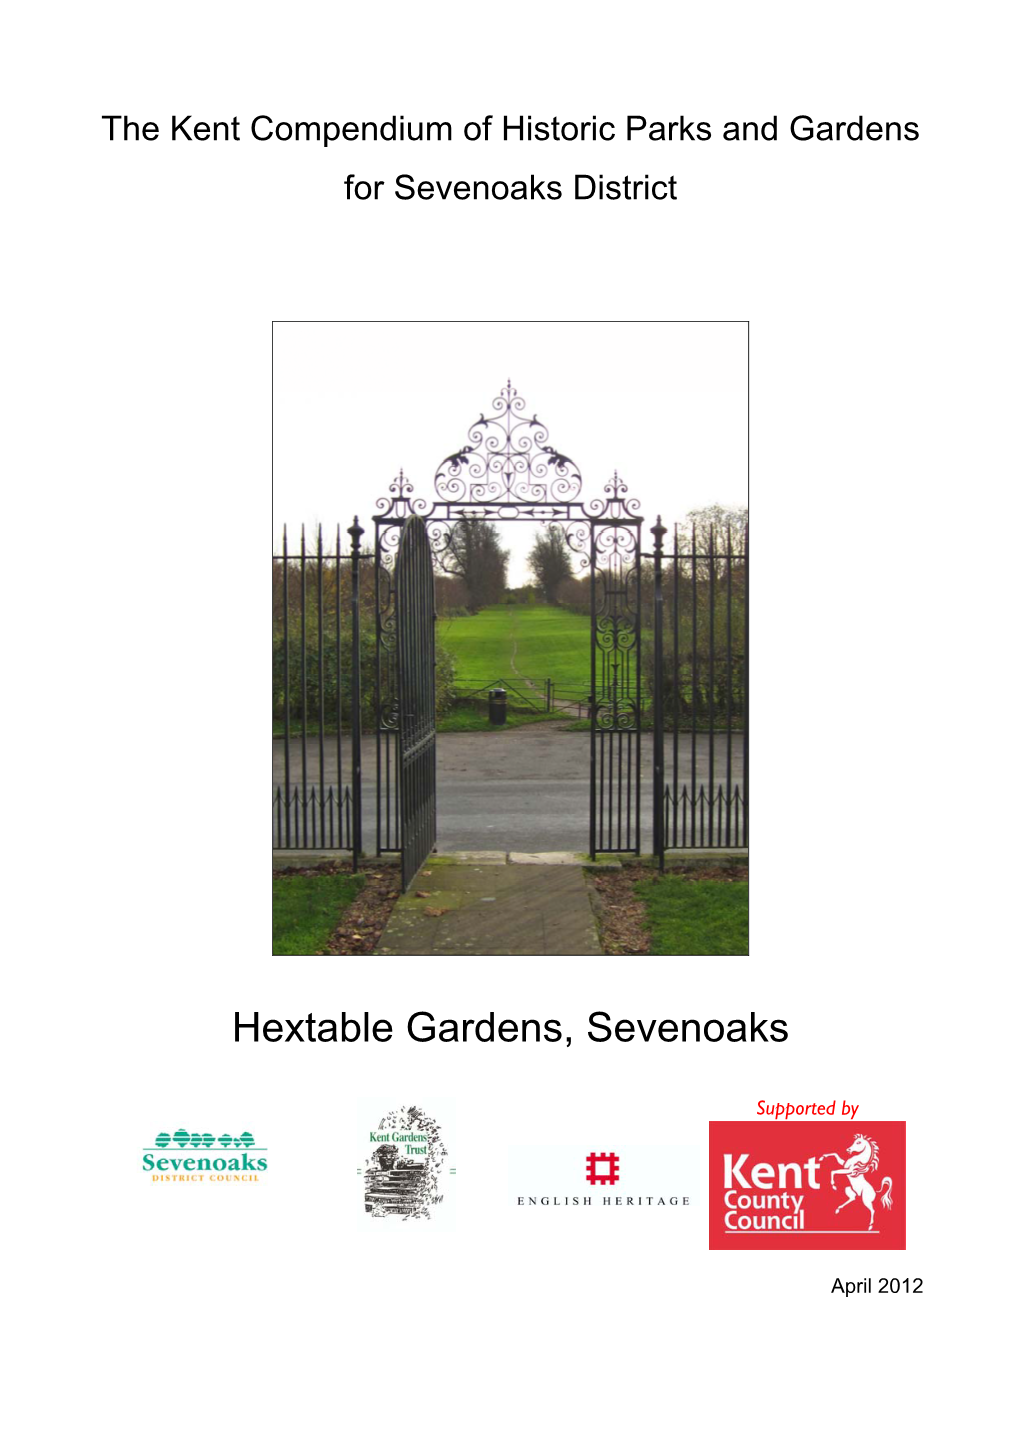 Hextable Gardens, Sevenoaks